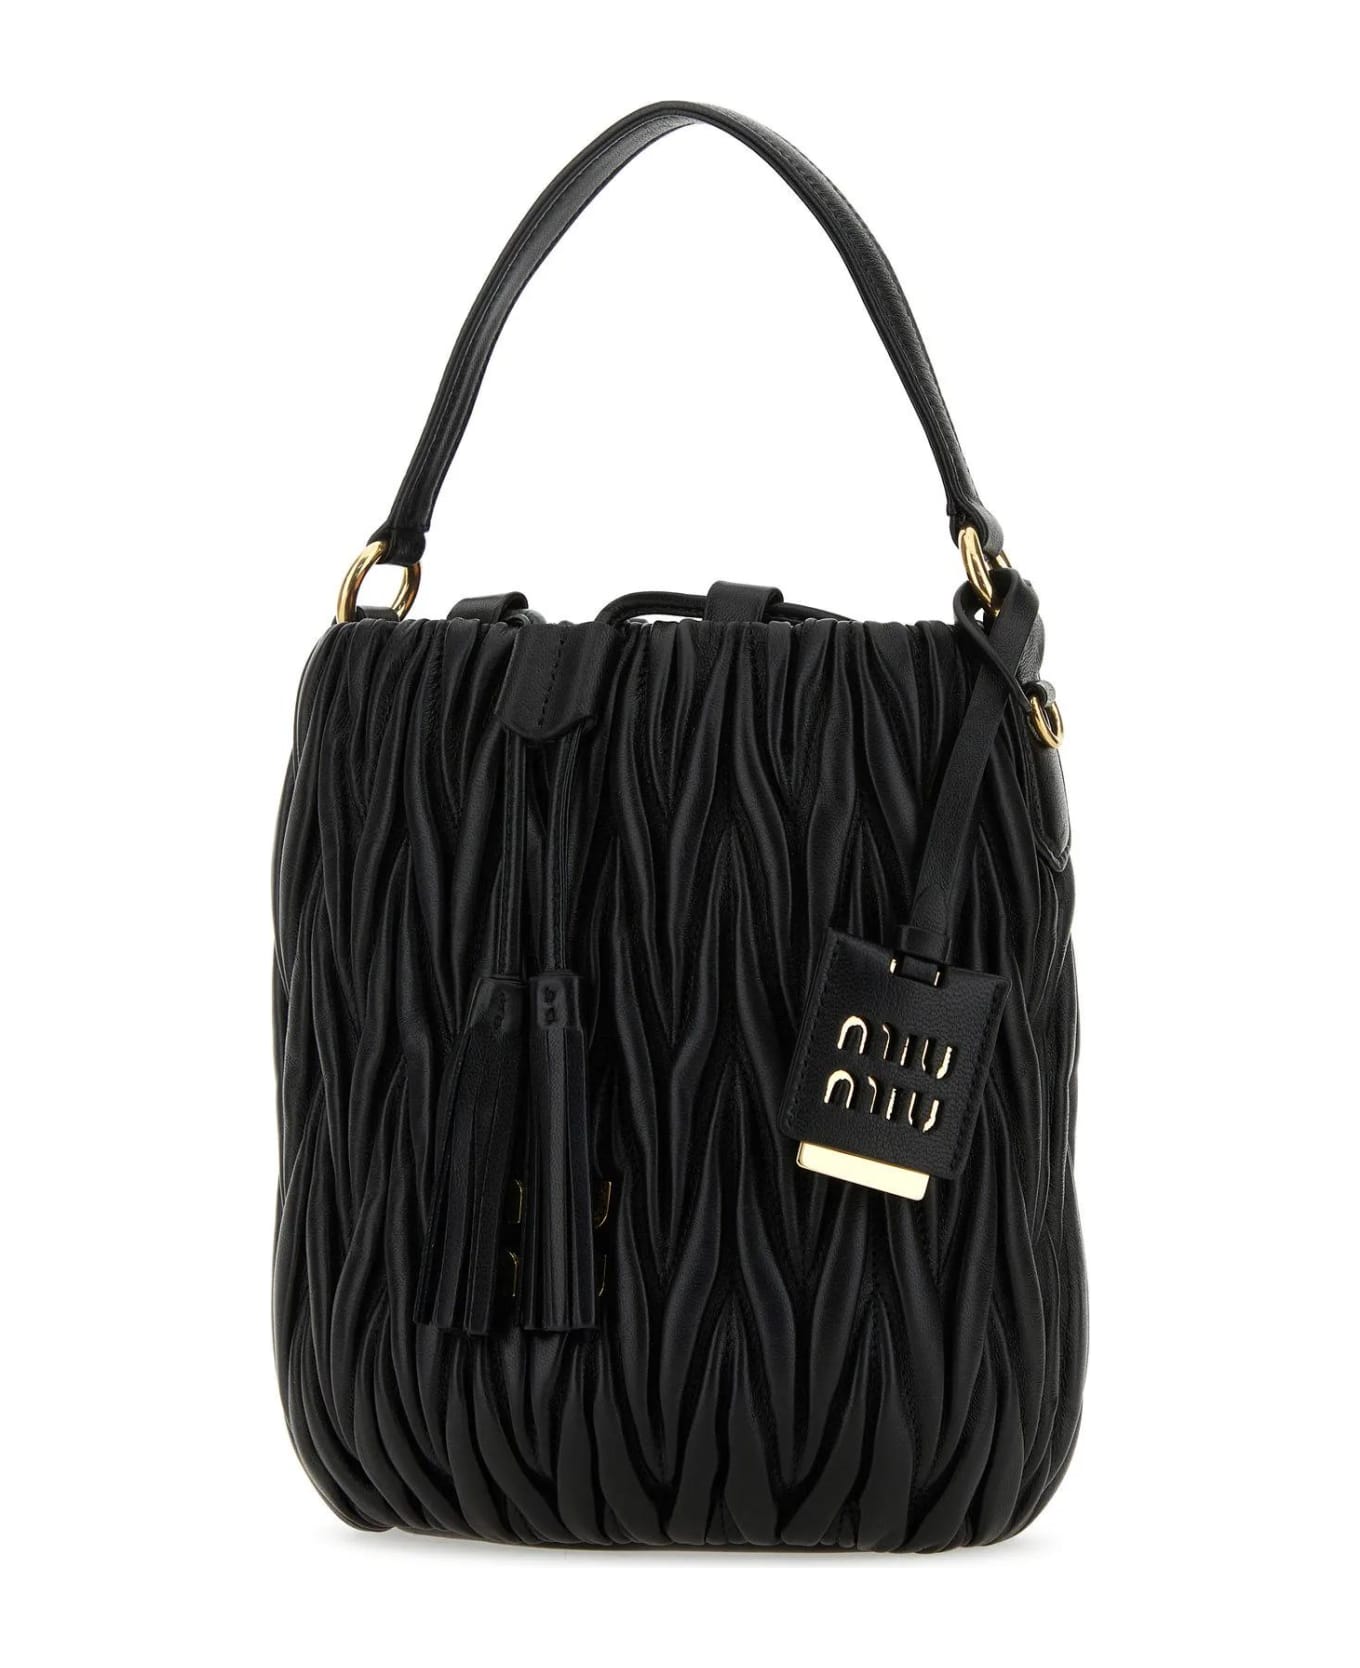 Miu Miu Black Nappa Leather Handbag - Black